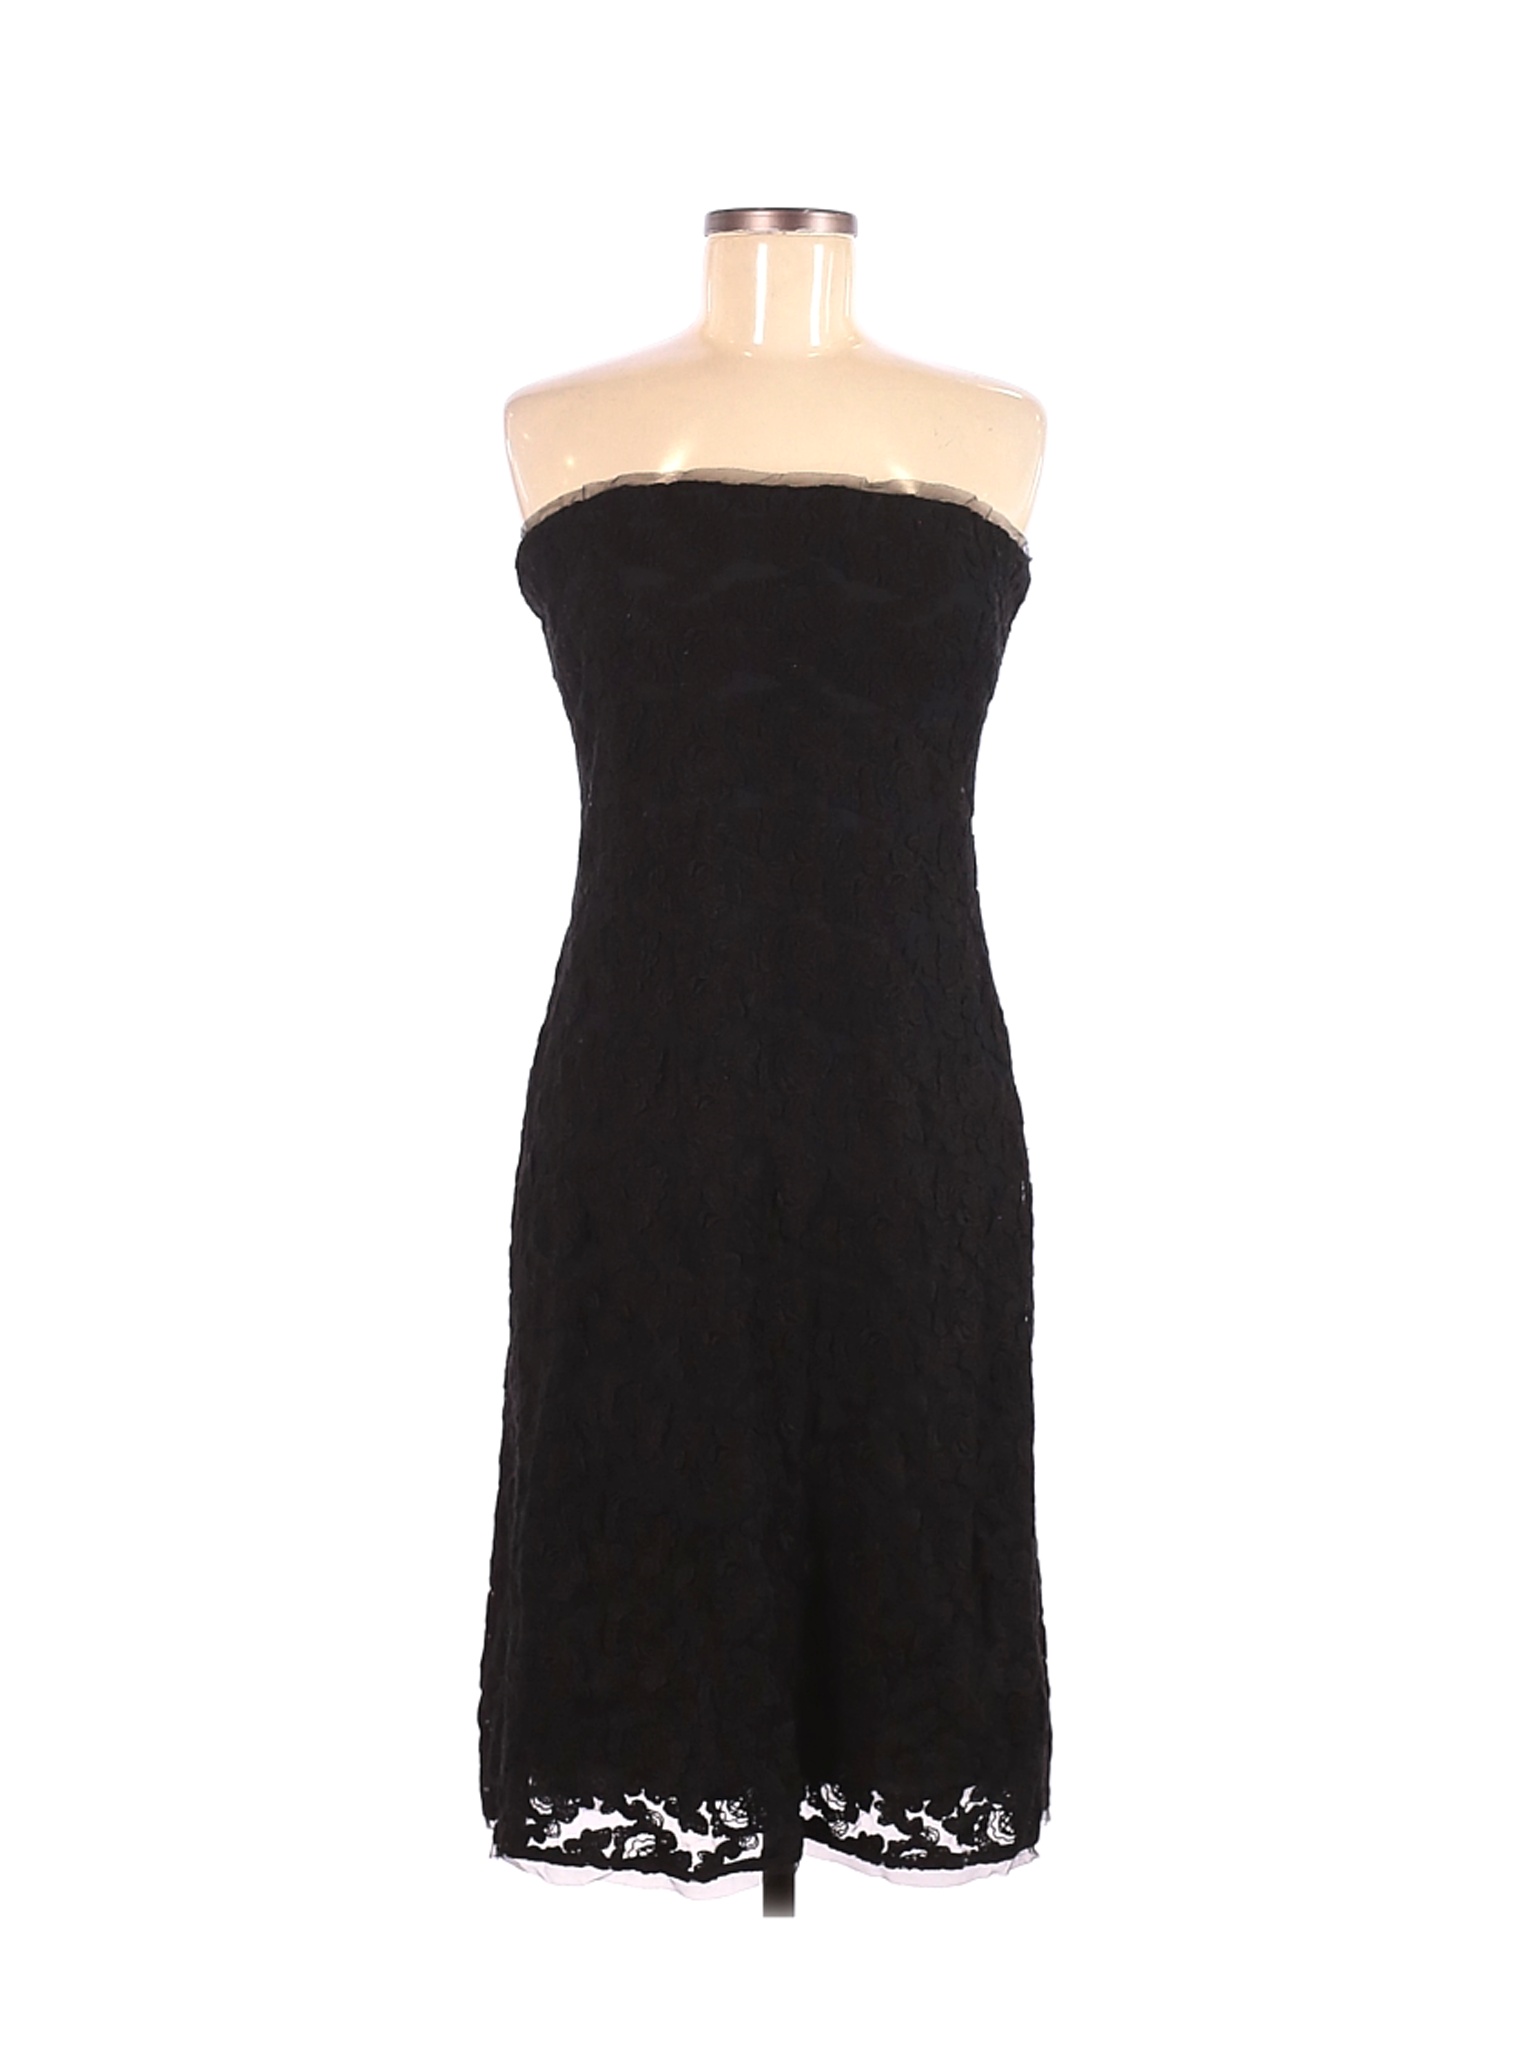 Poleci Women Black Cocktail Dress M | eBay